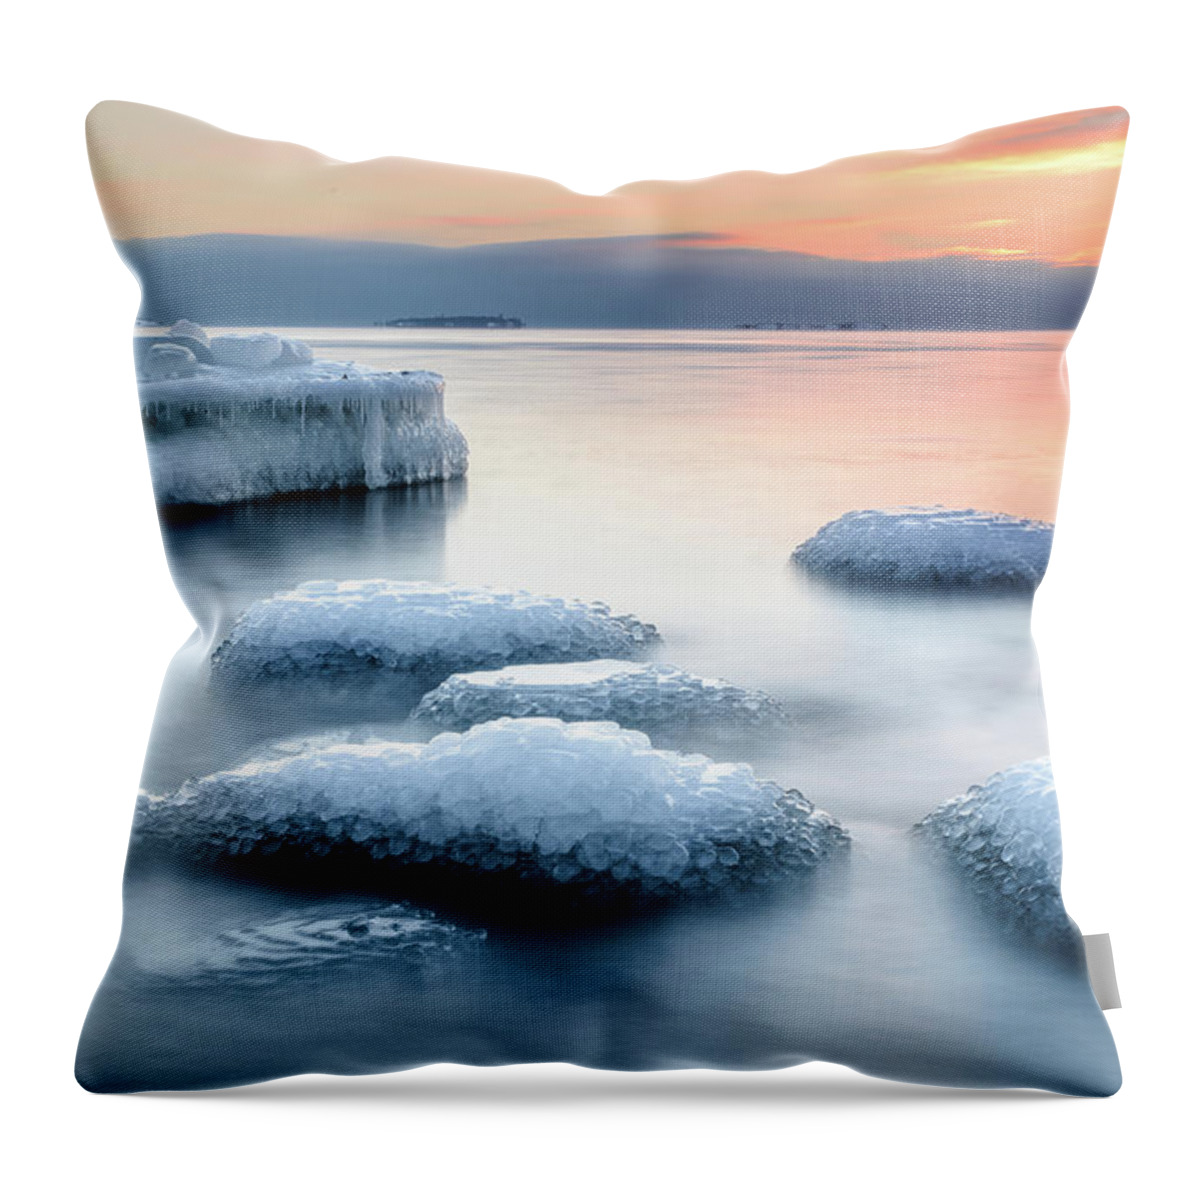 Scenics Throw Pillow featuring the photograph Ice Covered Rocks In Sea by Fineartphotoshots / Vesa Pihanurmi